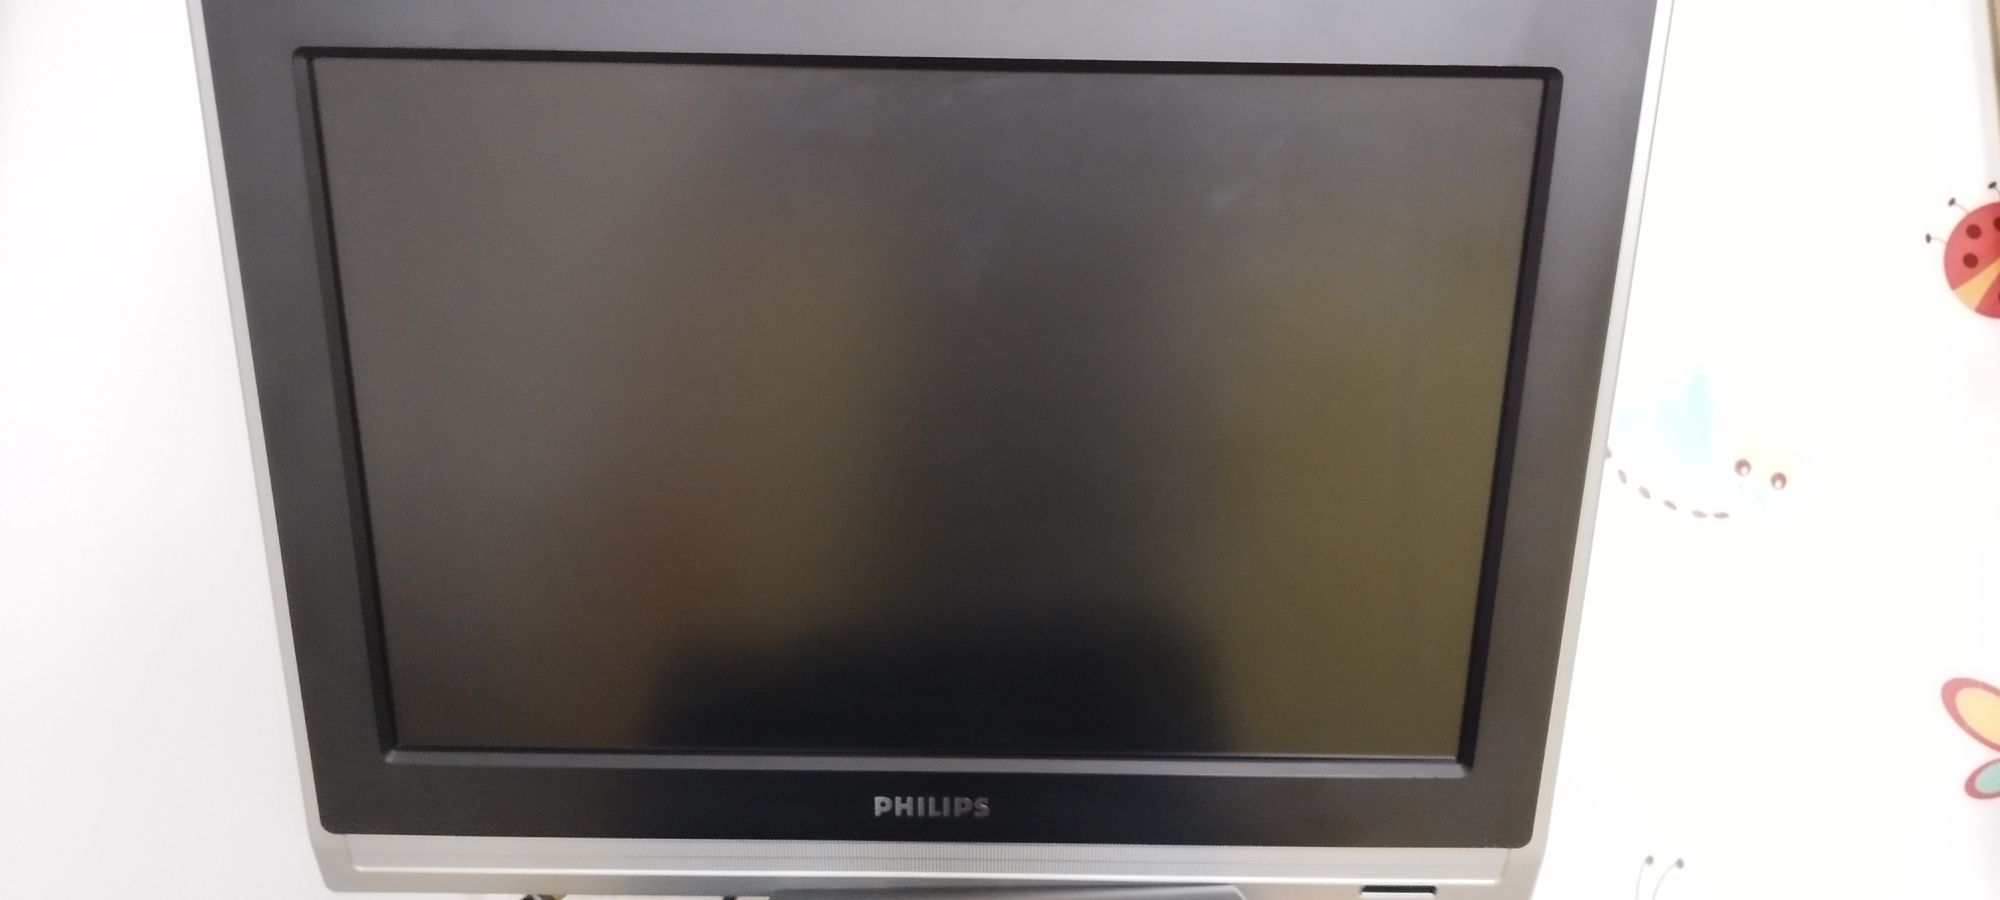 Tv Philips 19 inch